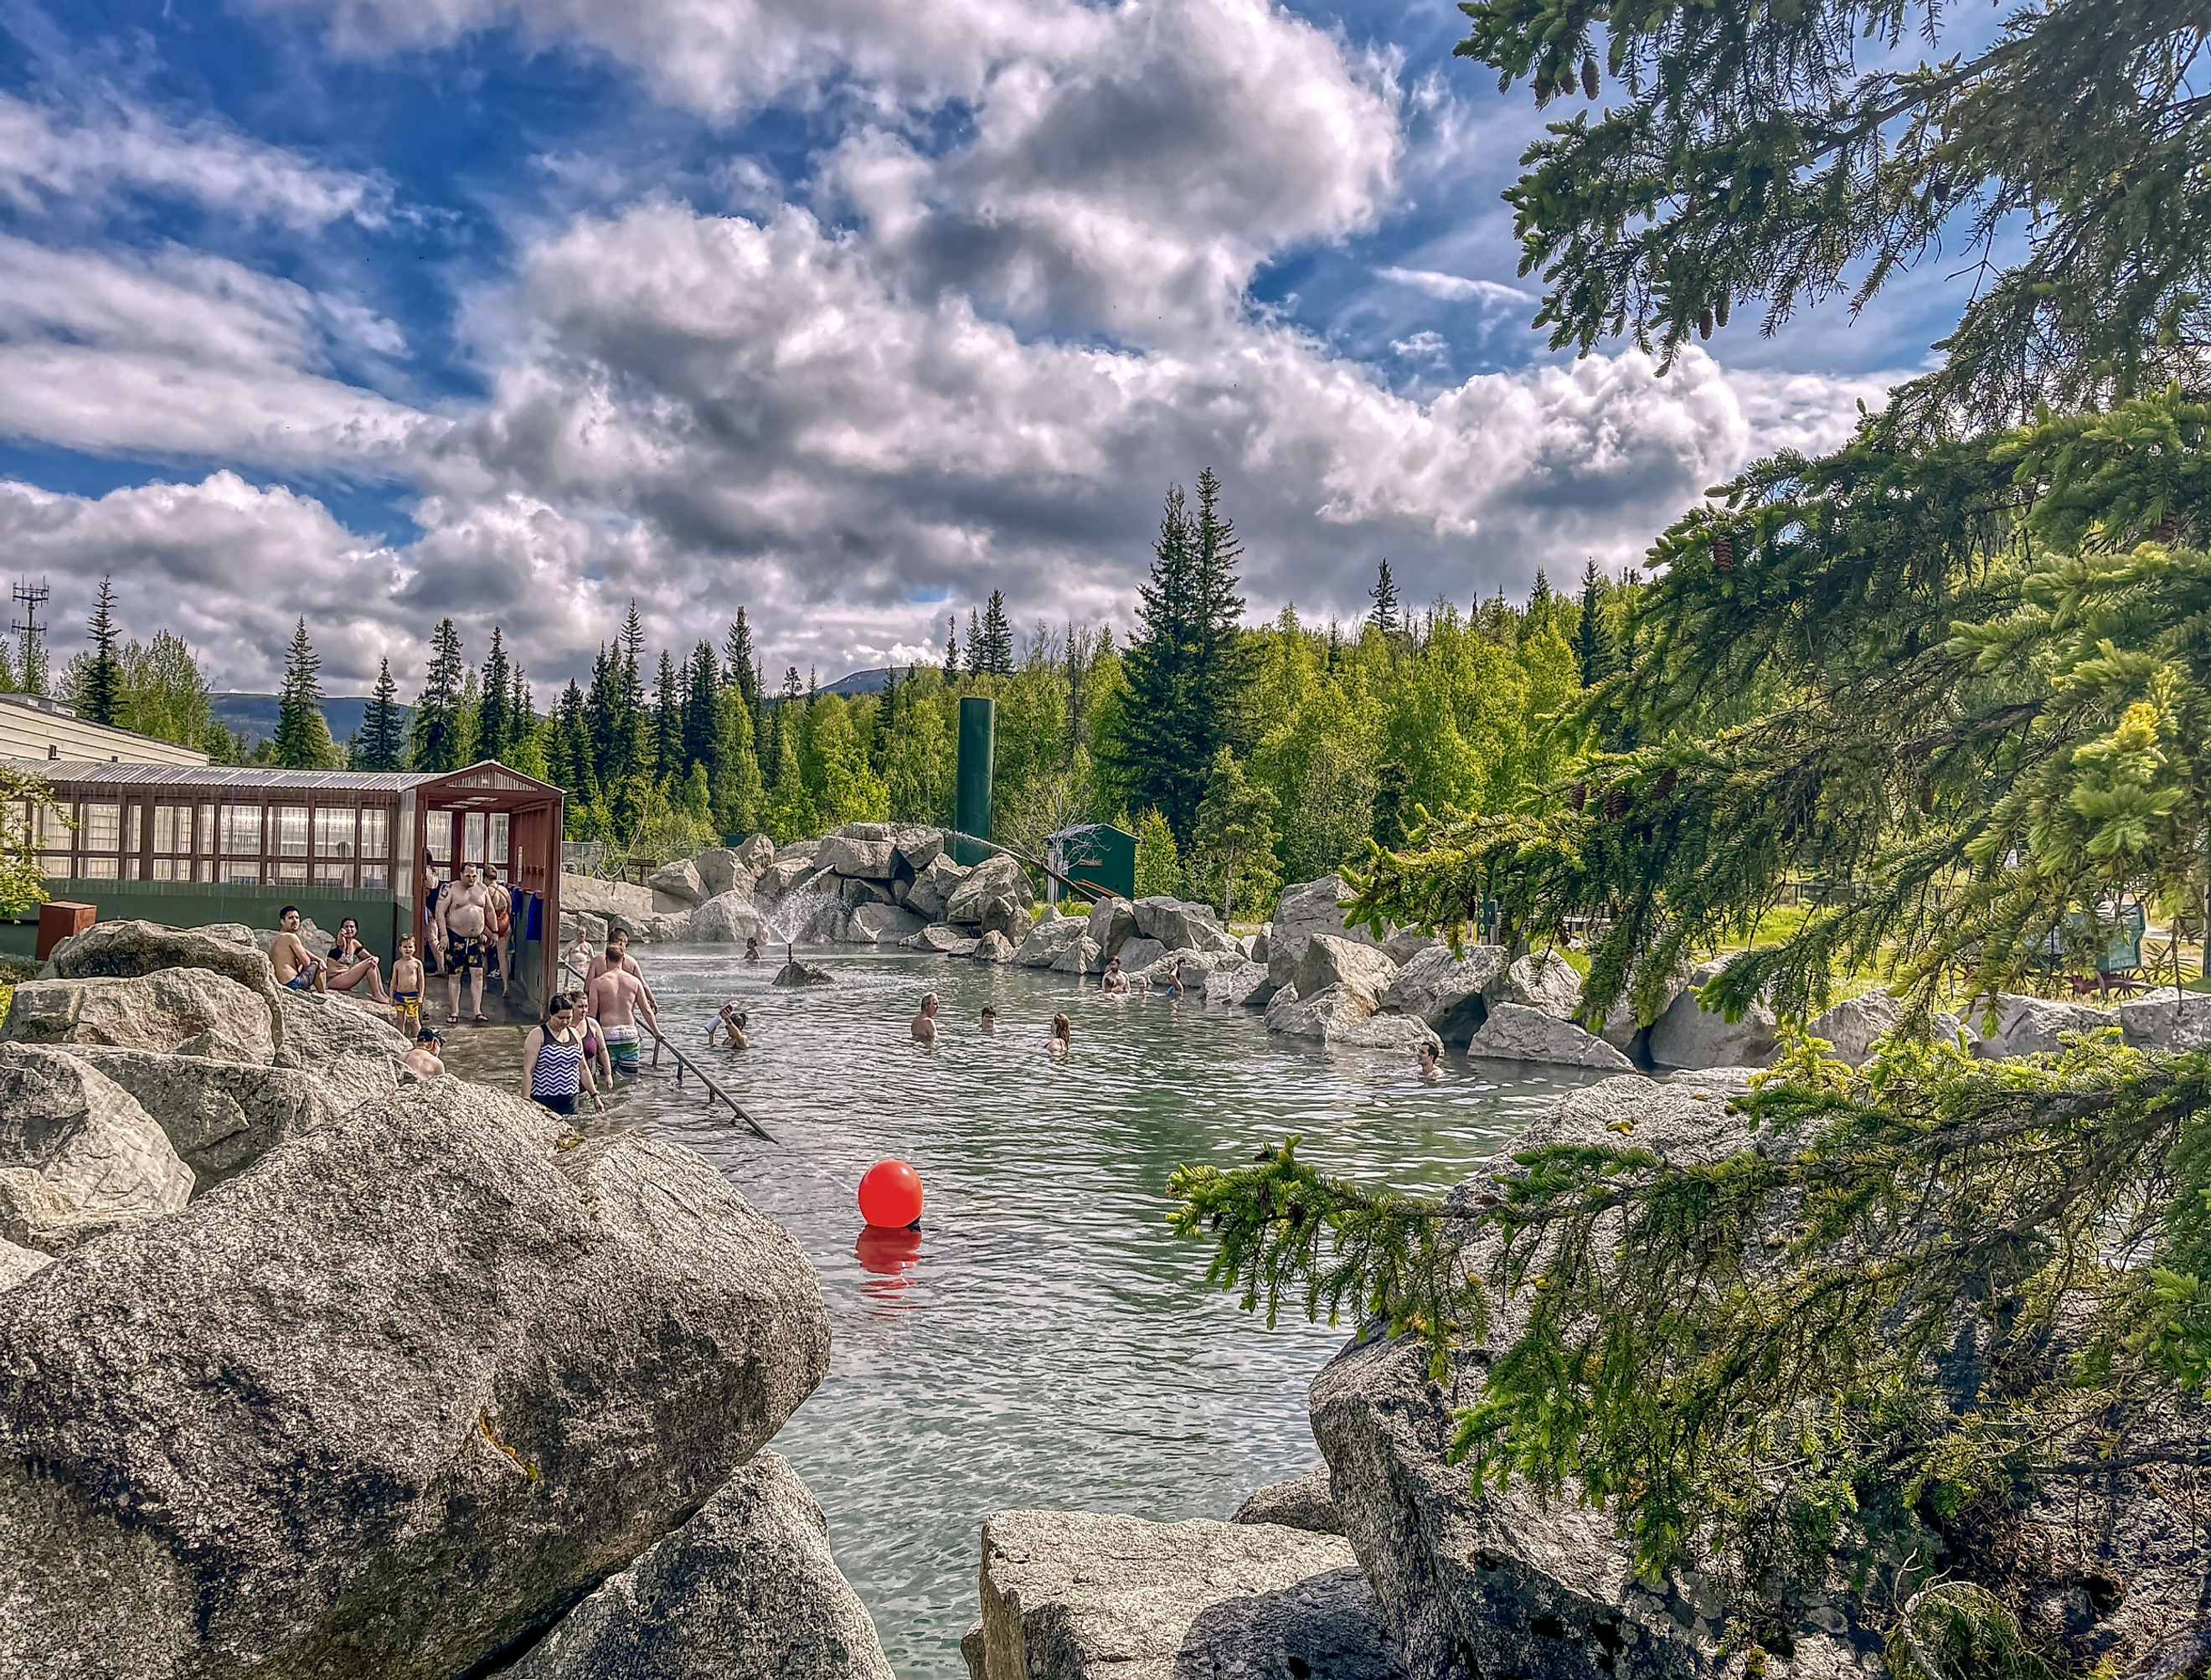 People relaxing in the Chena Hot Springs, Fairbanks, Alaska. Image credit Jacob Boomsma via shutterstock